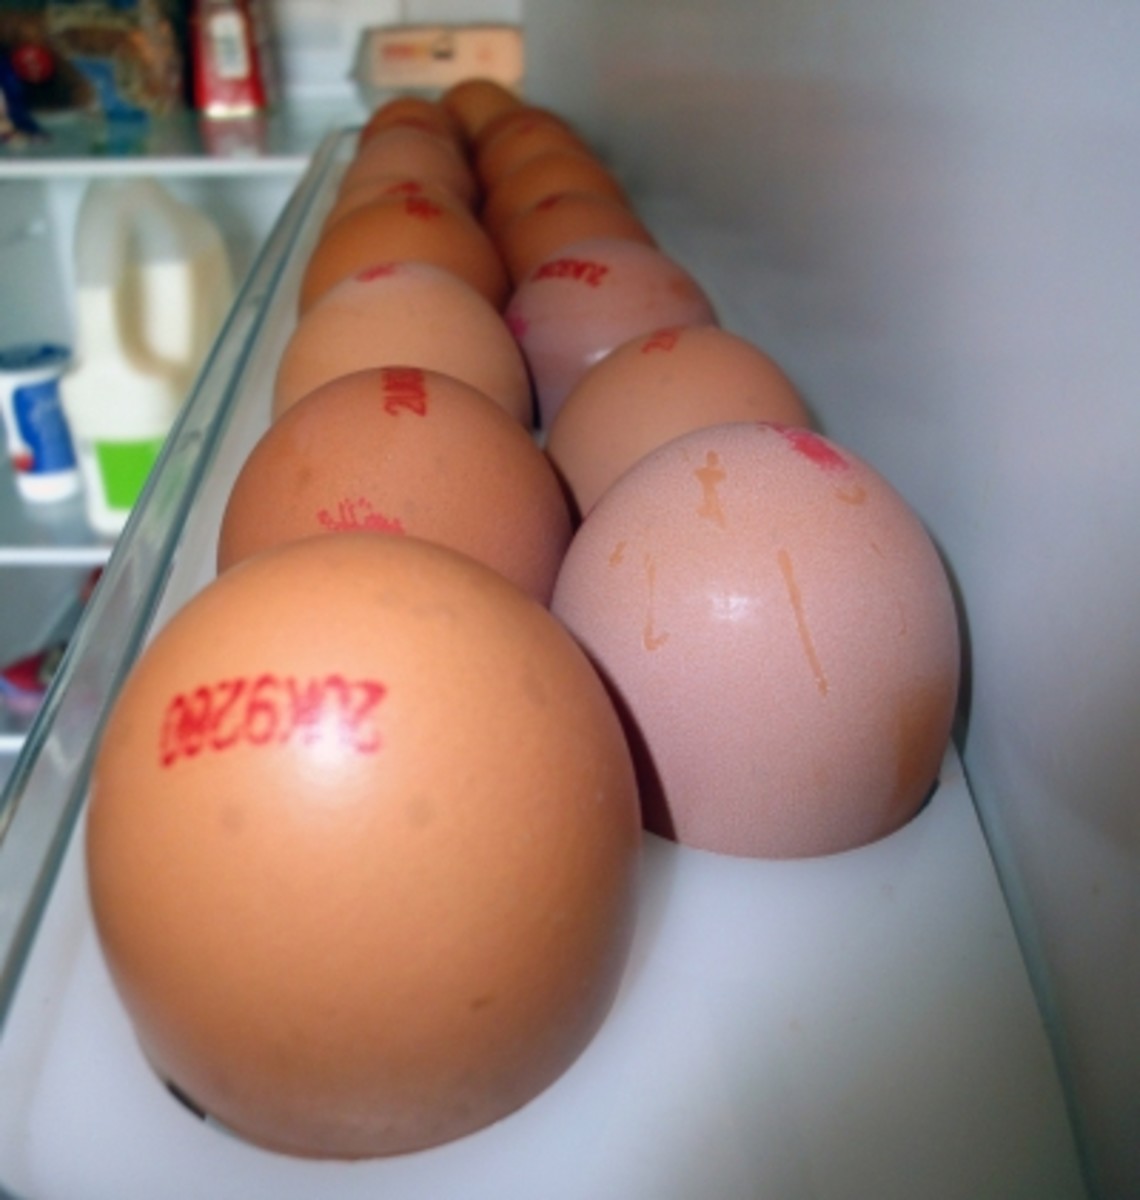 Bespoke fridge egg rack complete and in use